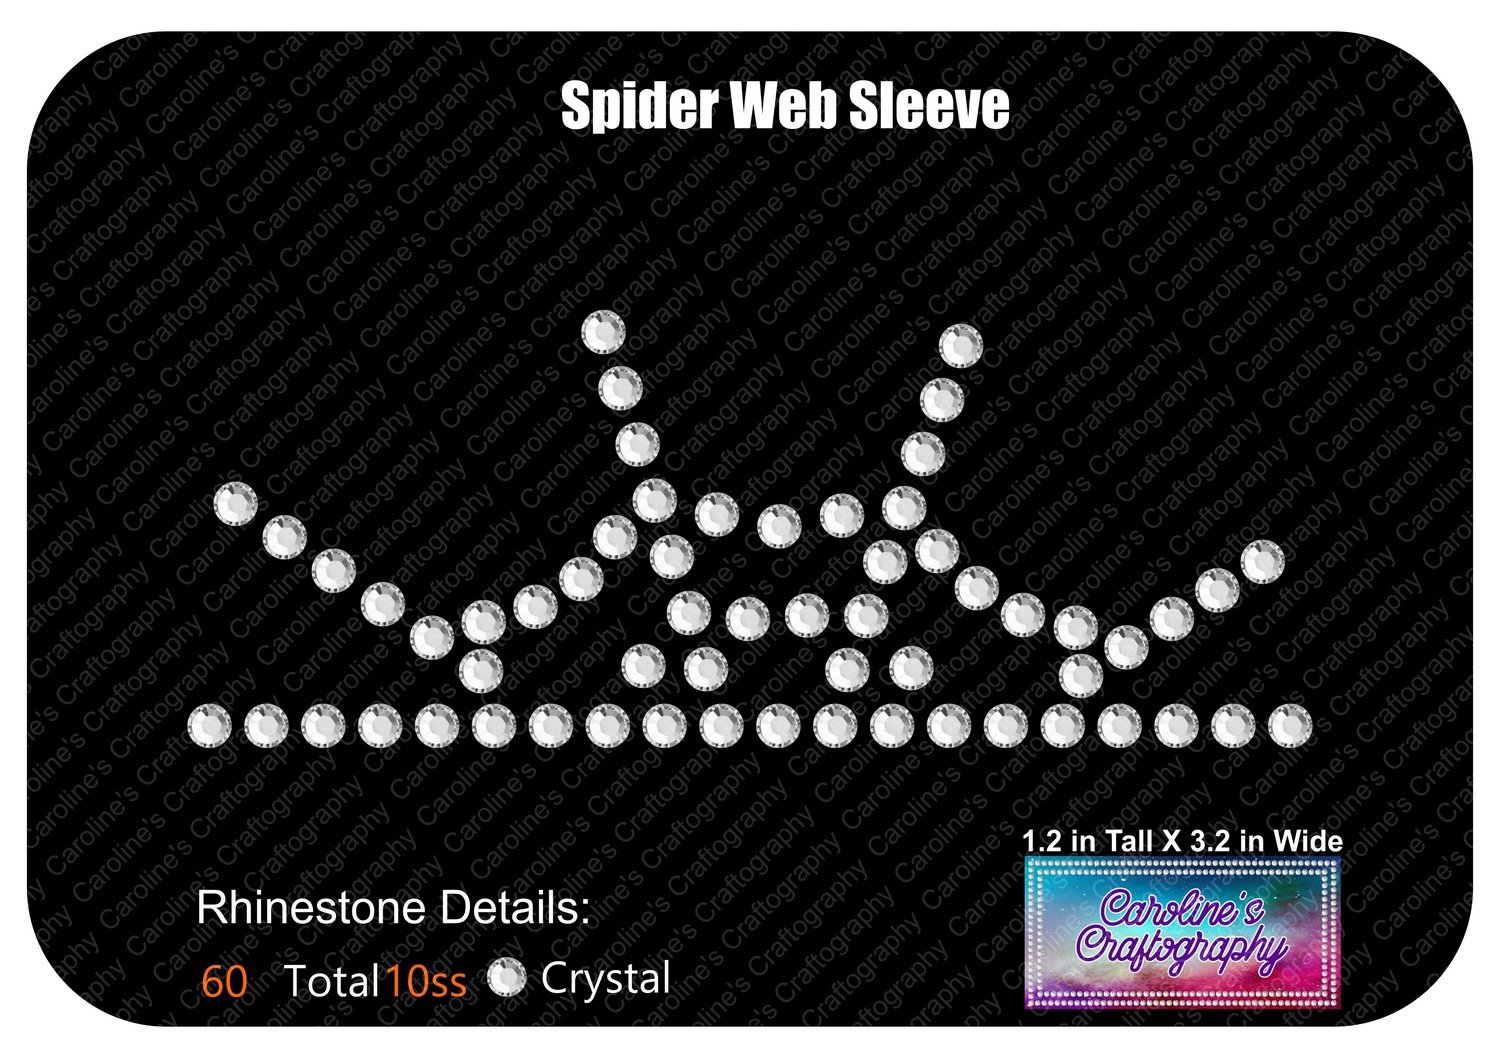 Spider Web Sleeve or Pocket Rhinestone Design